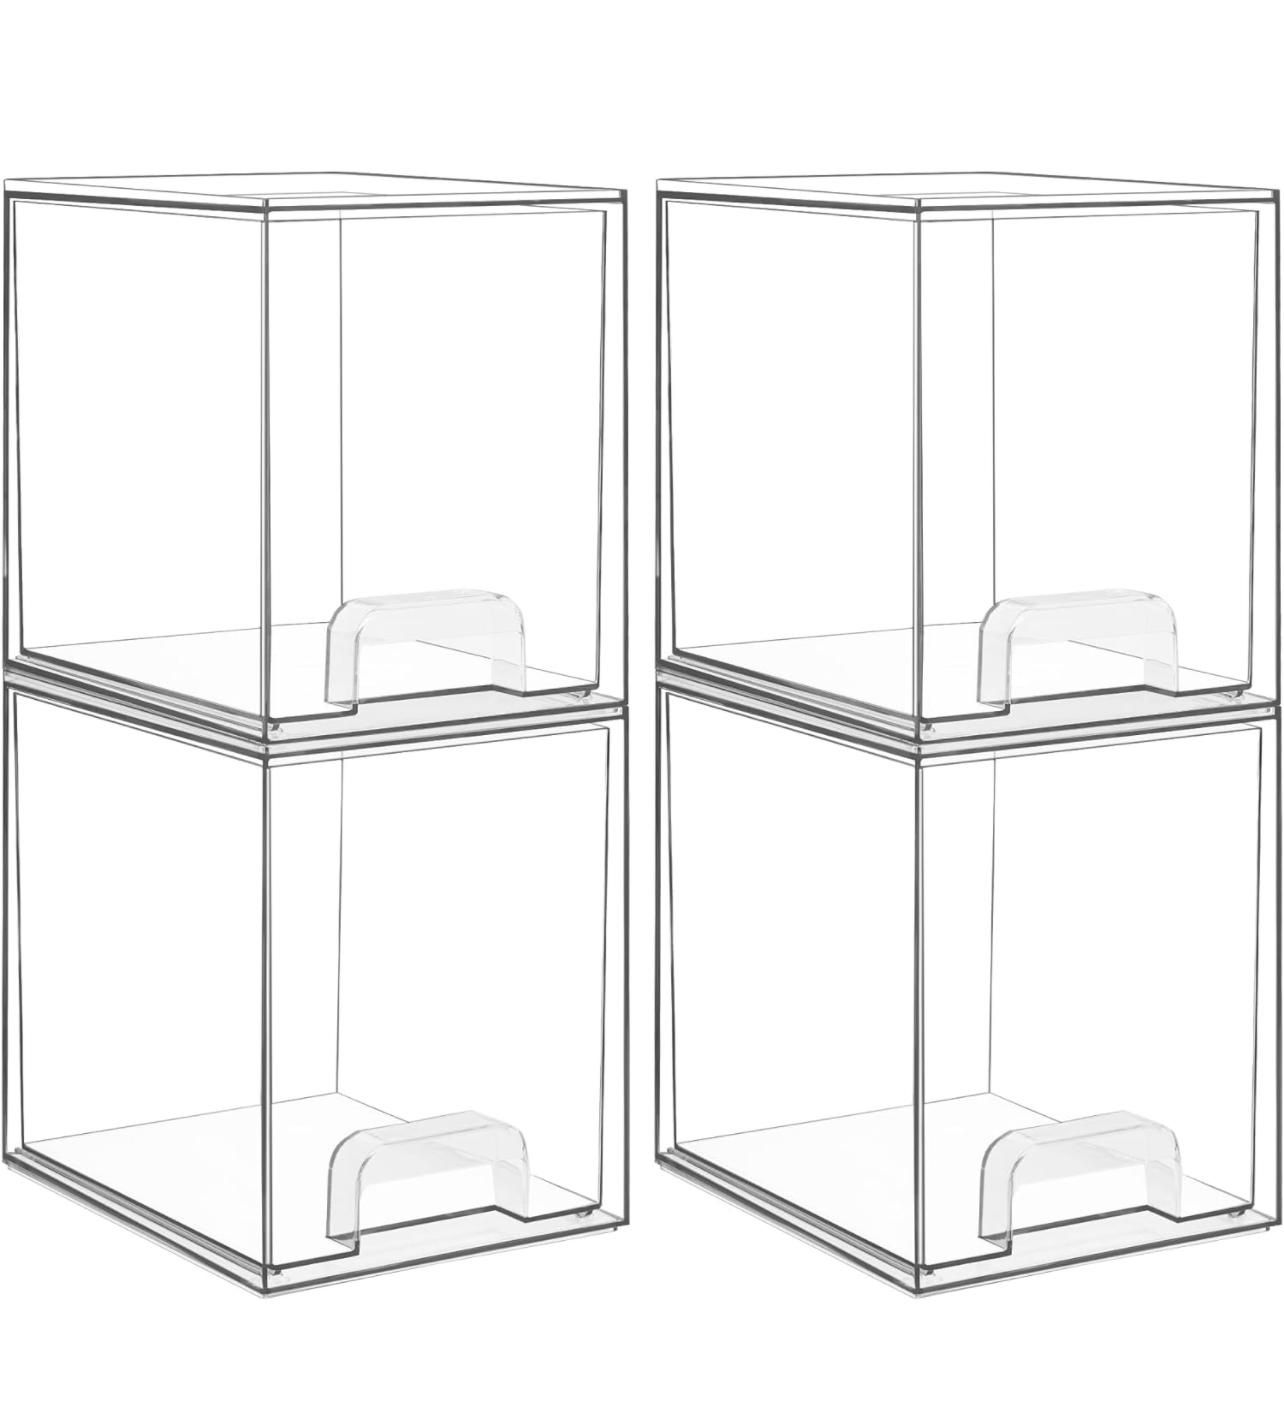 Storage Drawers, Plastic Organizer ( 4 Pack)